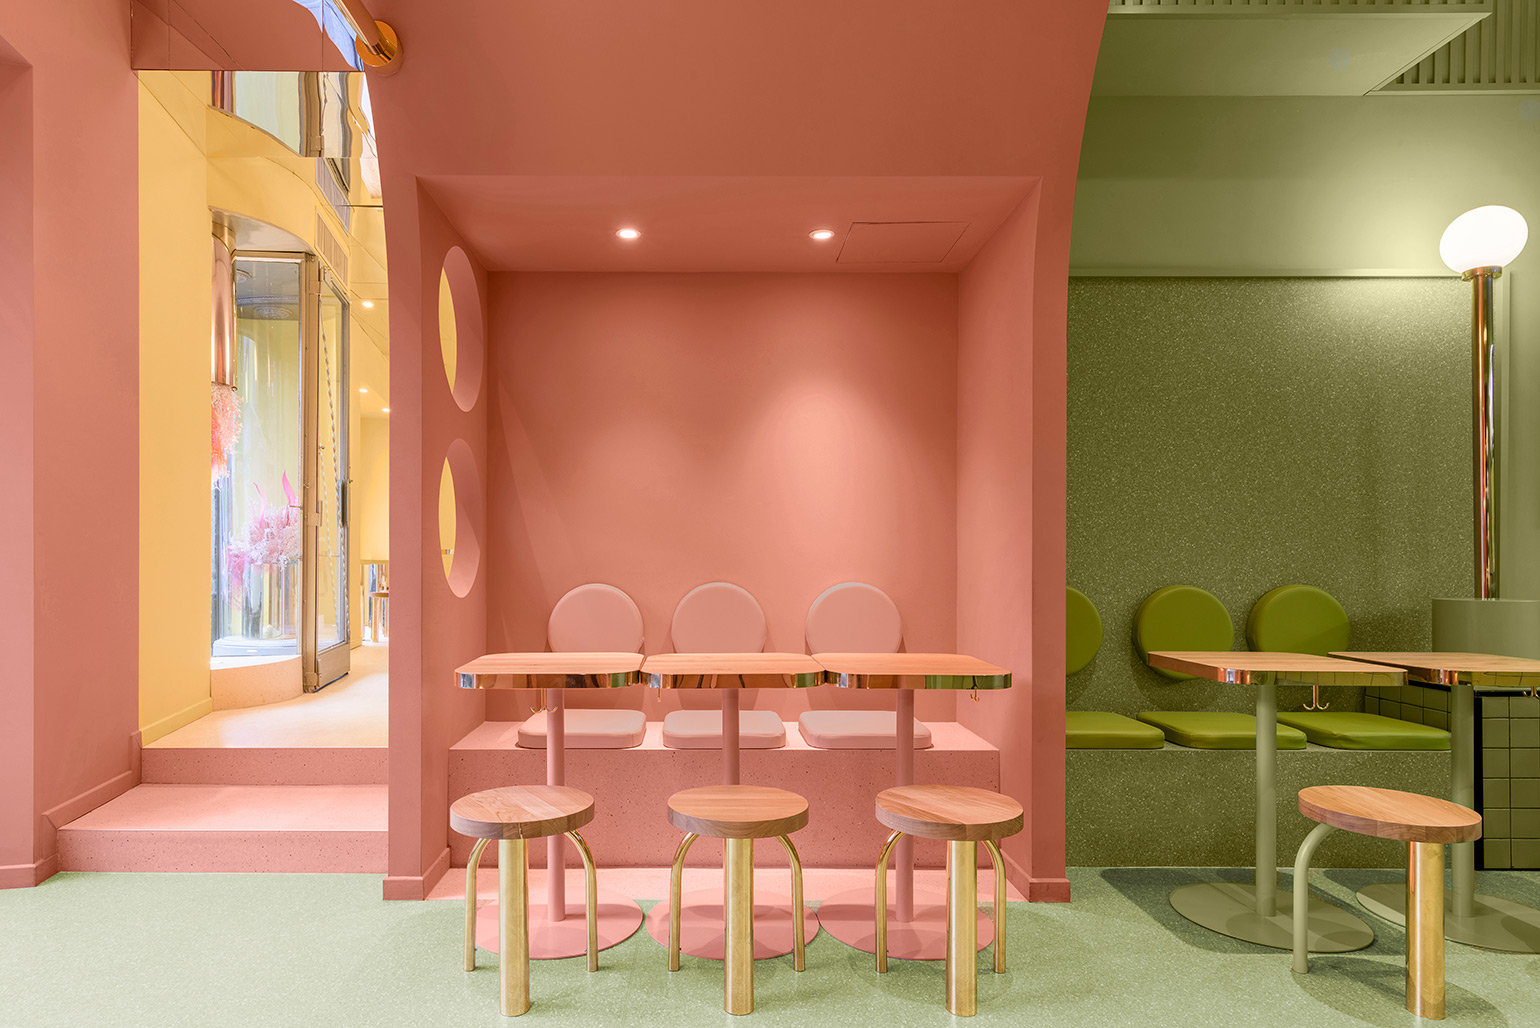 Masquespacio Designs New Restaurant in Milan for Bun Burgers